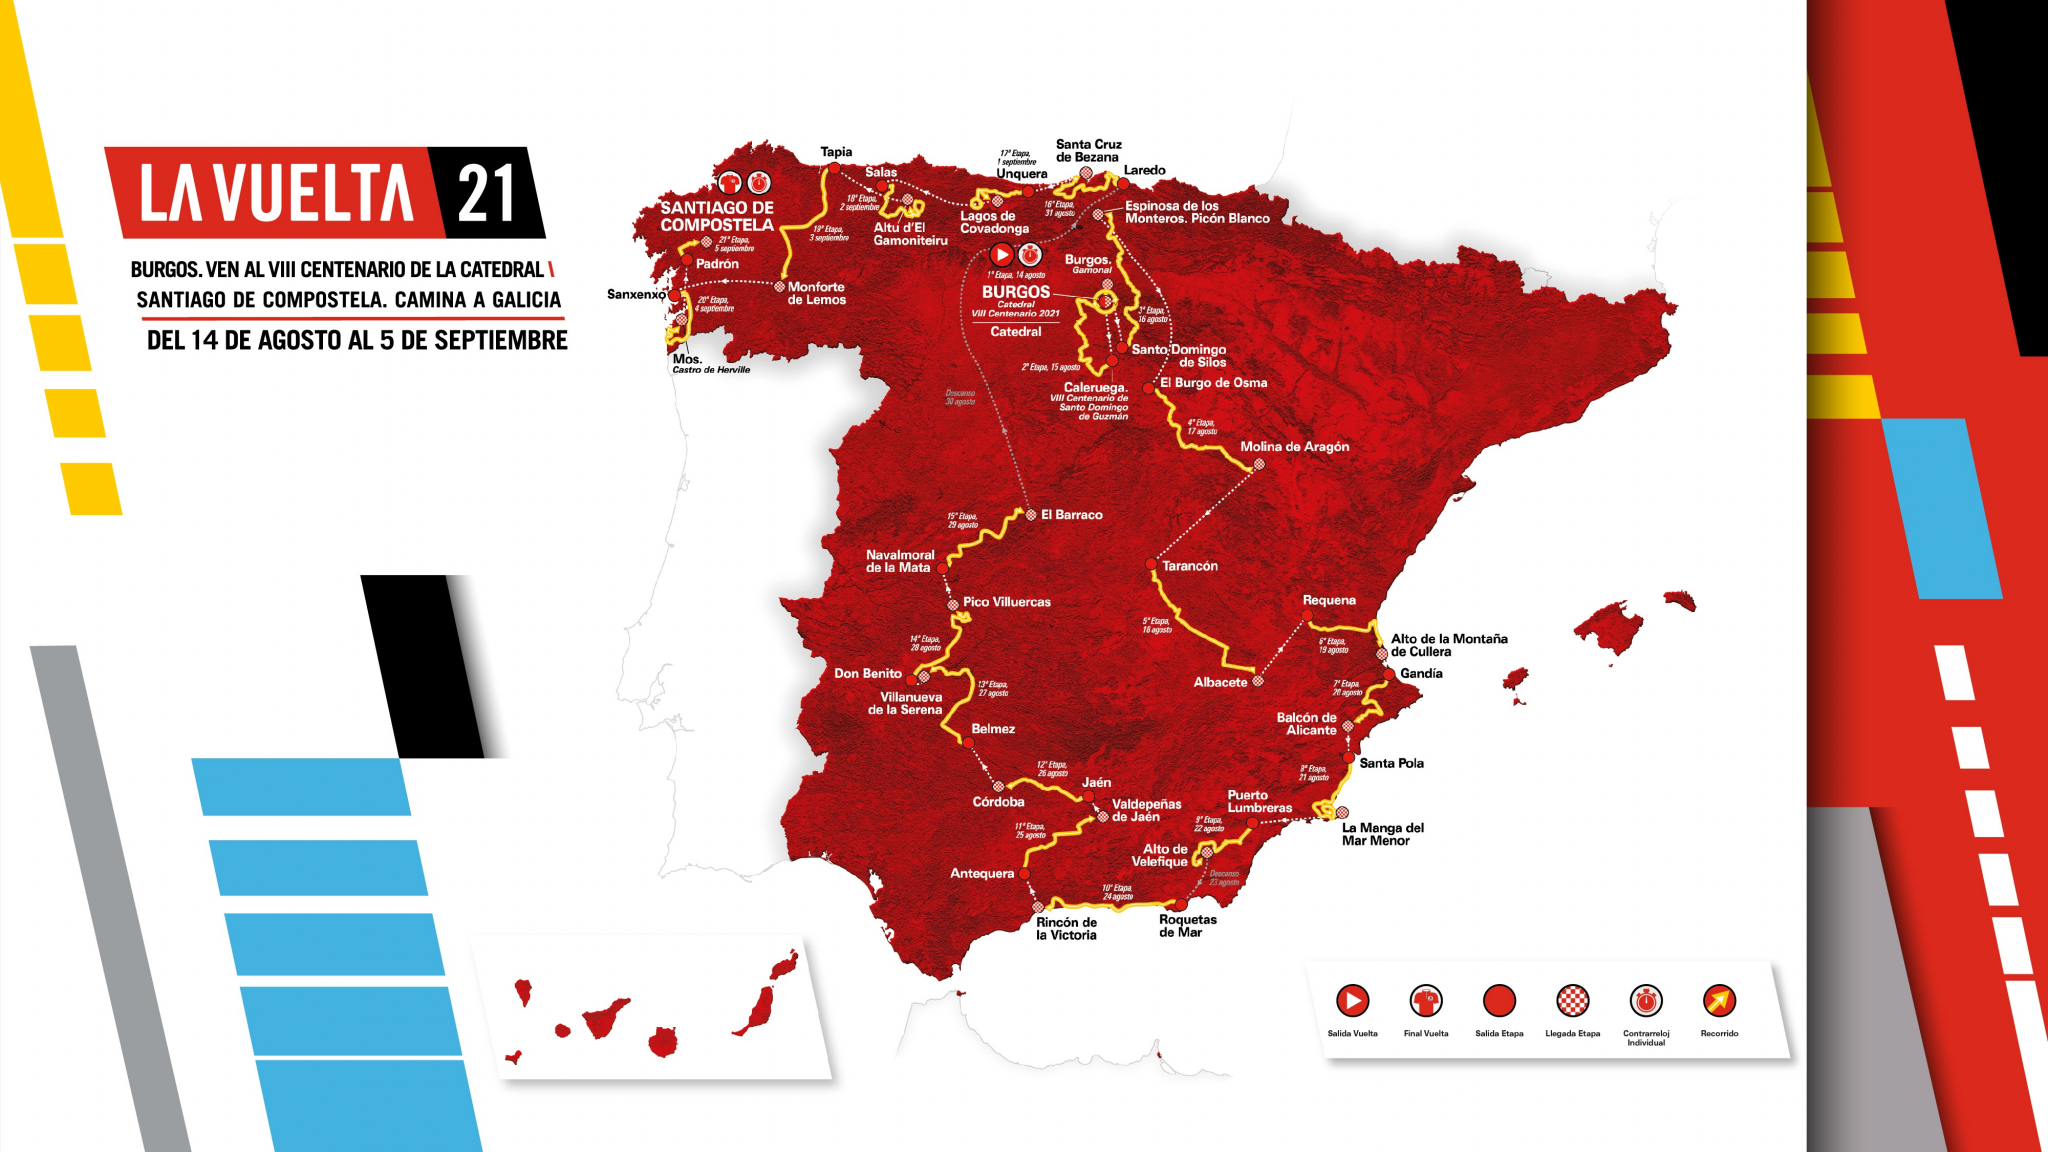 Vuelta a España reveal all-Spanish route for 2021 race